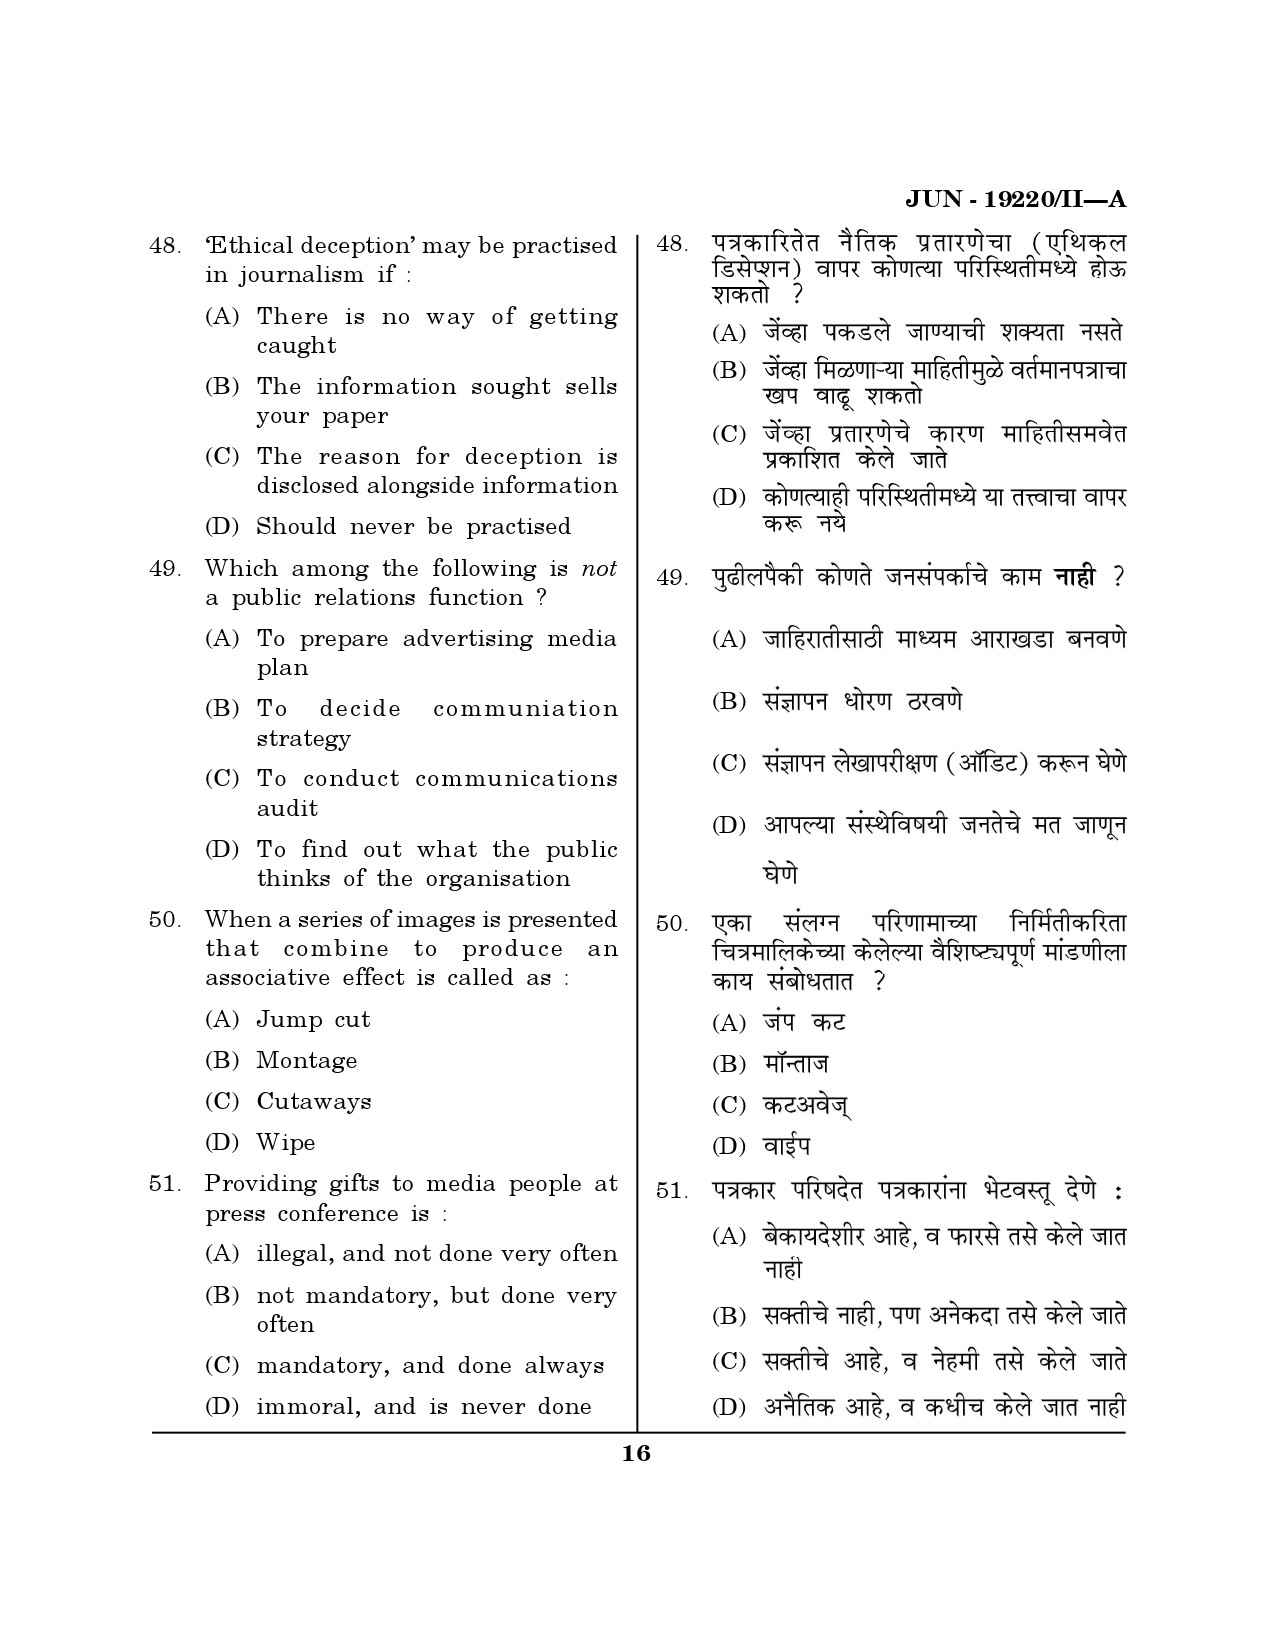 Maharashtra SET Journalism and Mass Communication Question Paper II June 2020 15